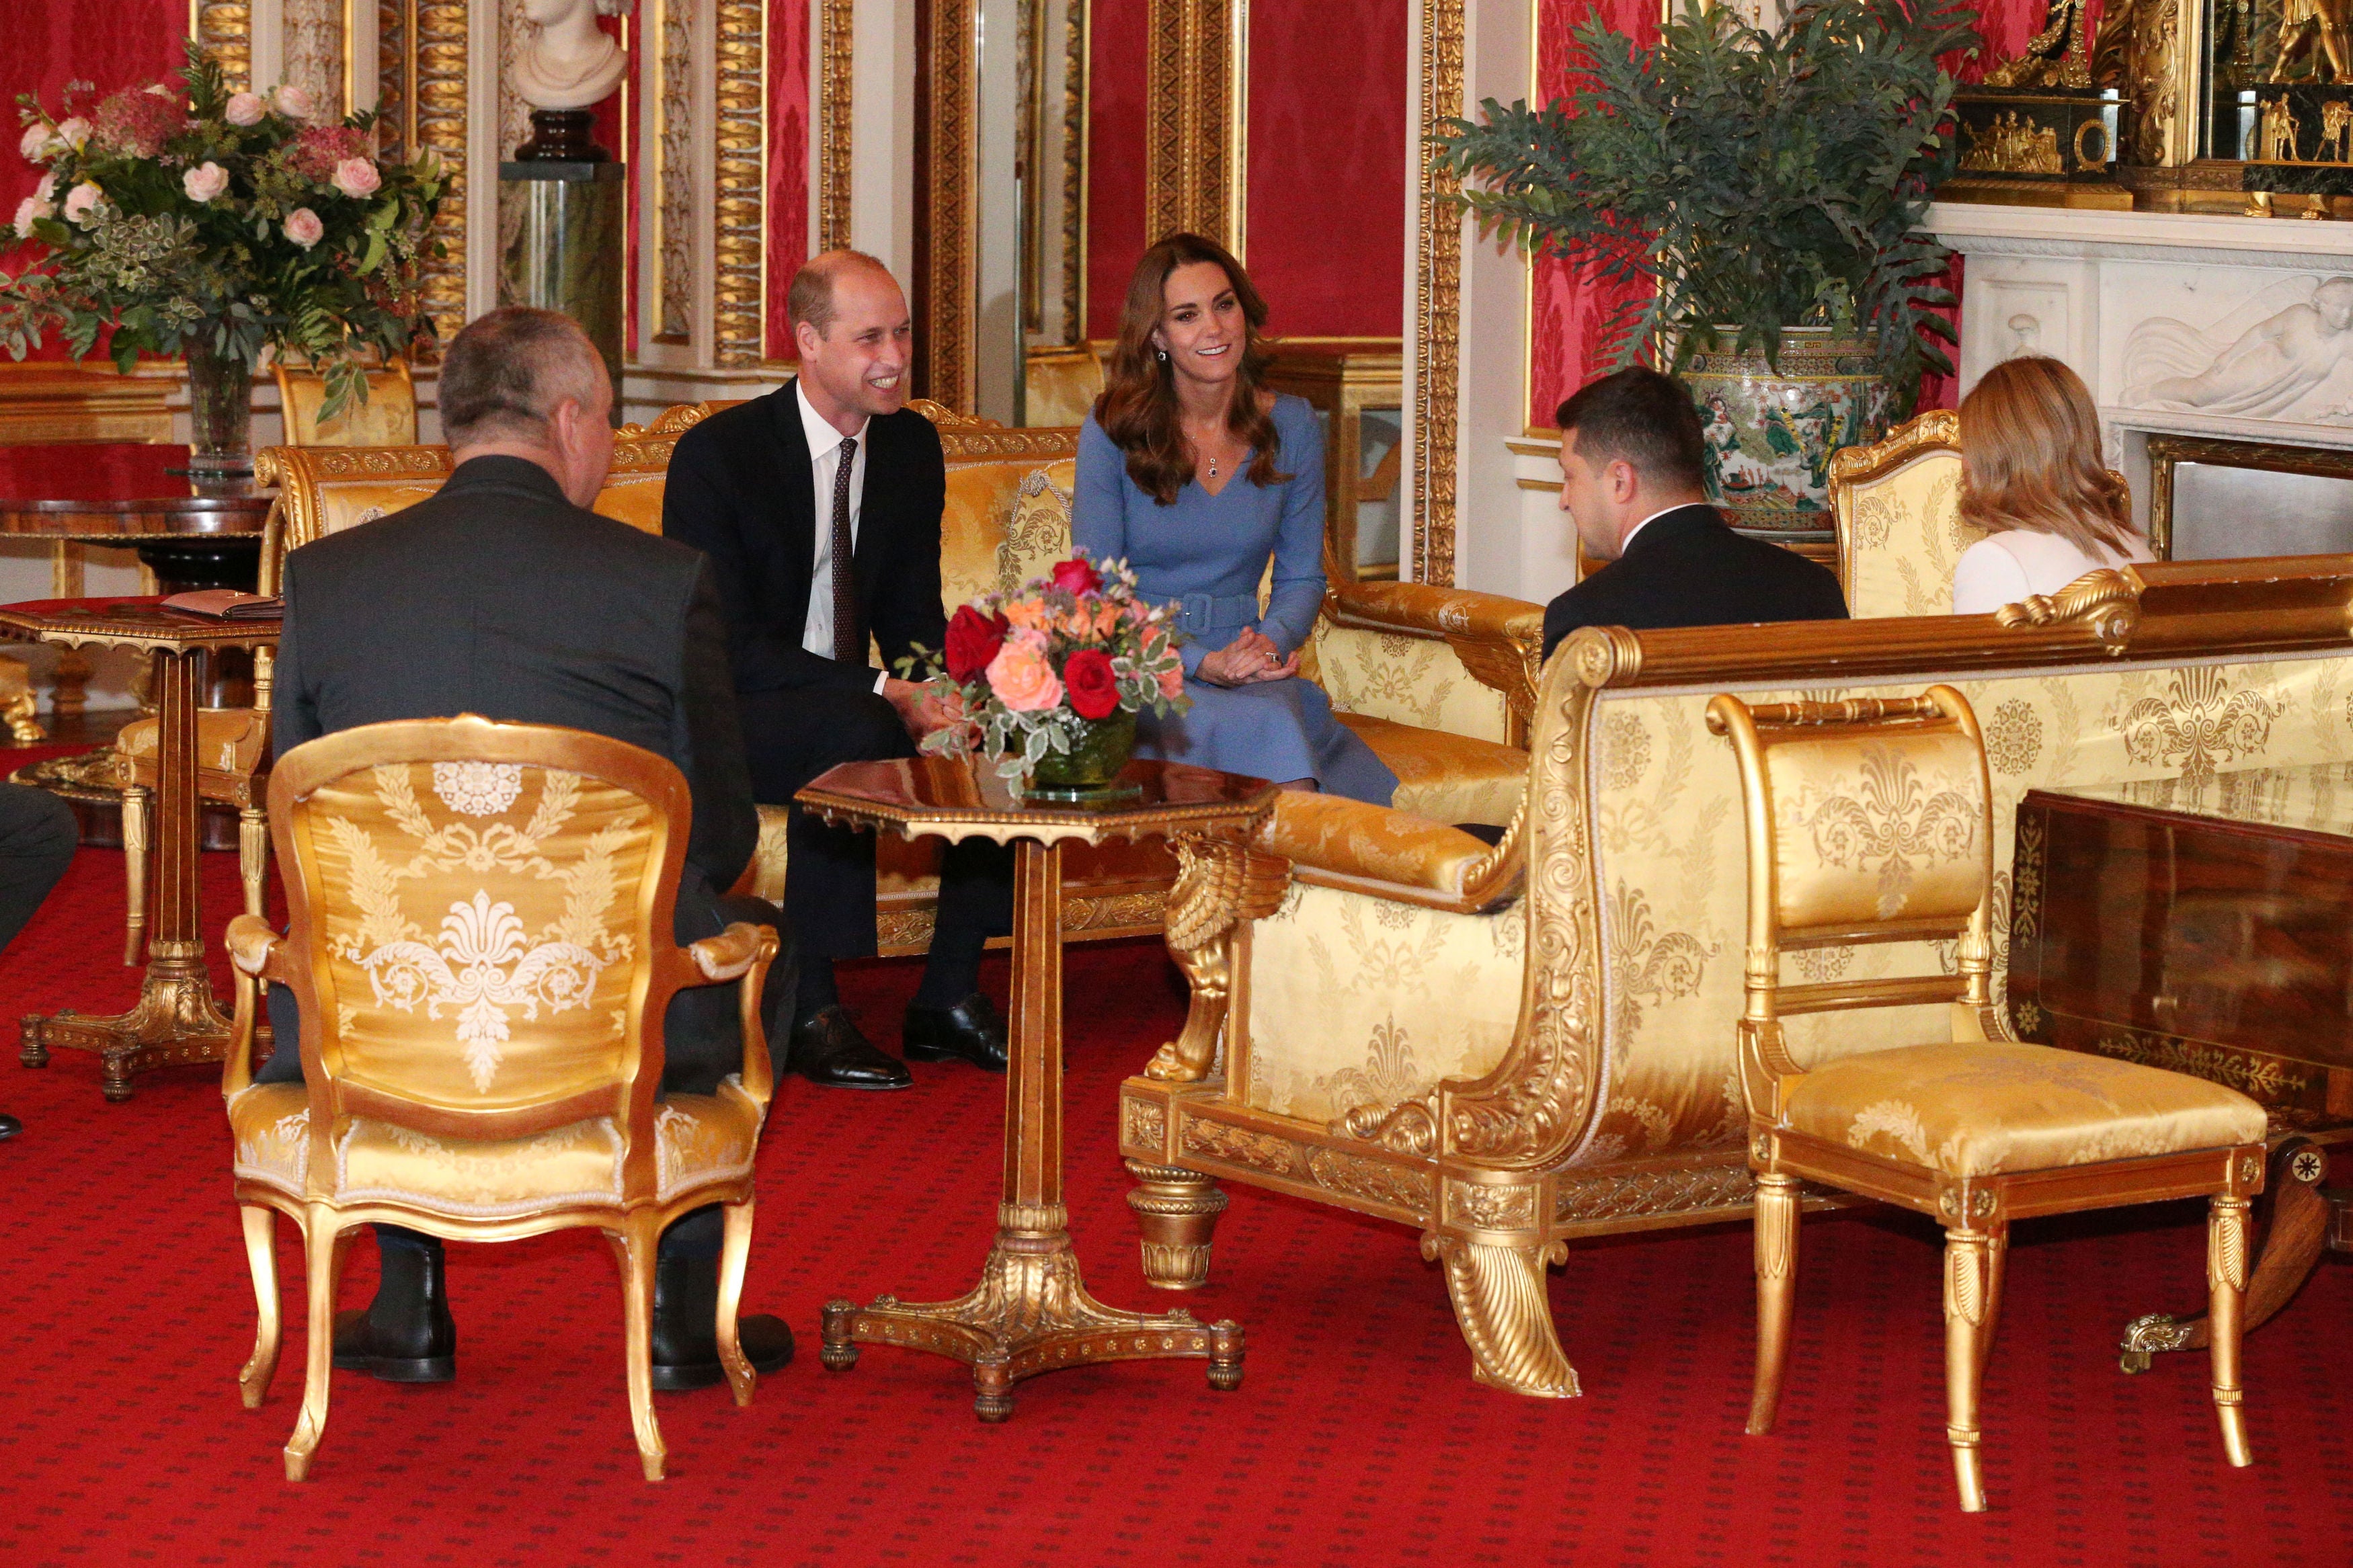 Kate Middleton rewears jewellery she wore to meet President Volodymyr Zelensky in 2020